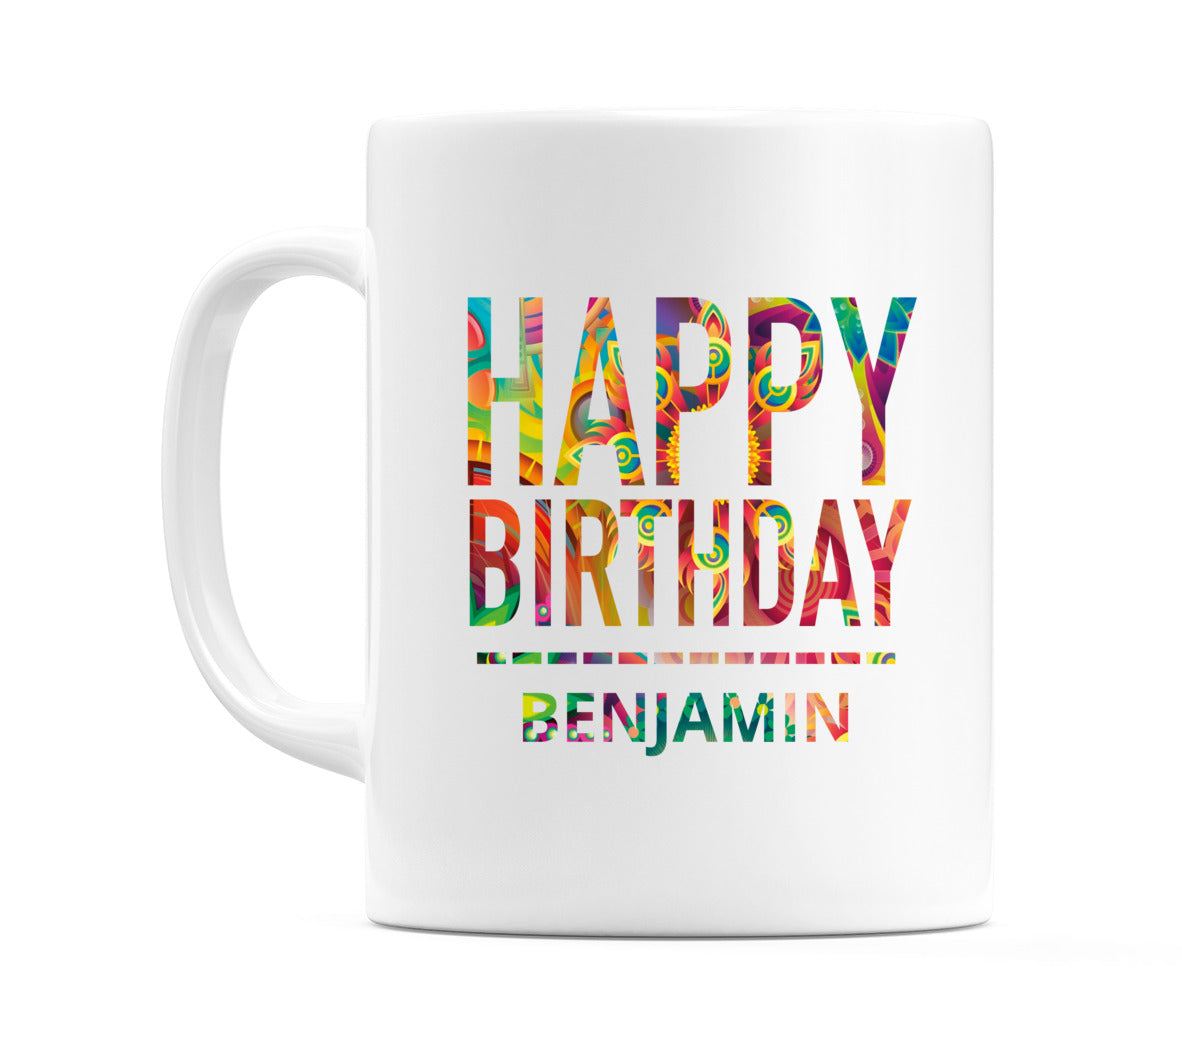 Happy Birthday Benjamin (Tie Dye Effect) Mug Cup by WeDoMugs